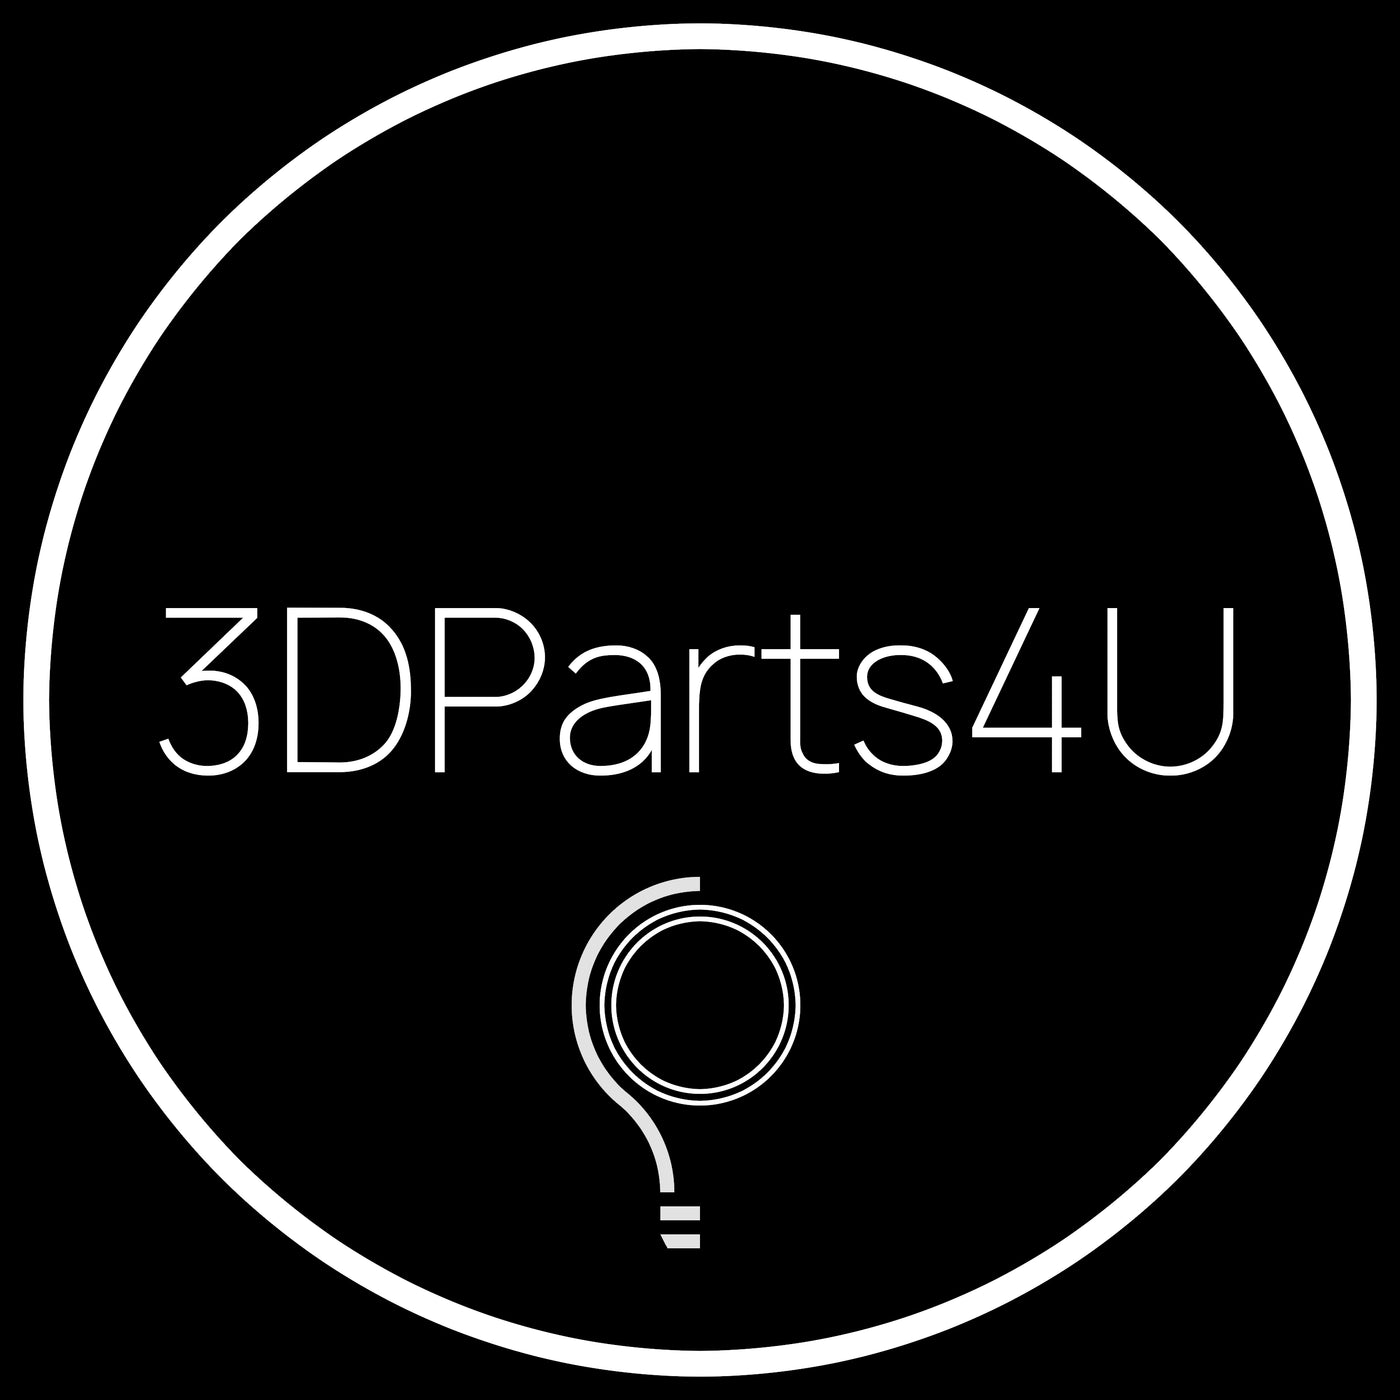 3DParts4U